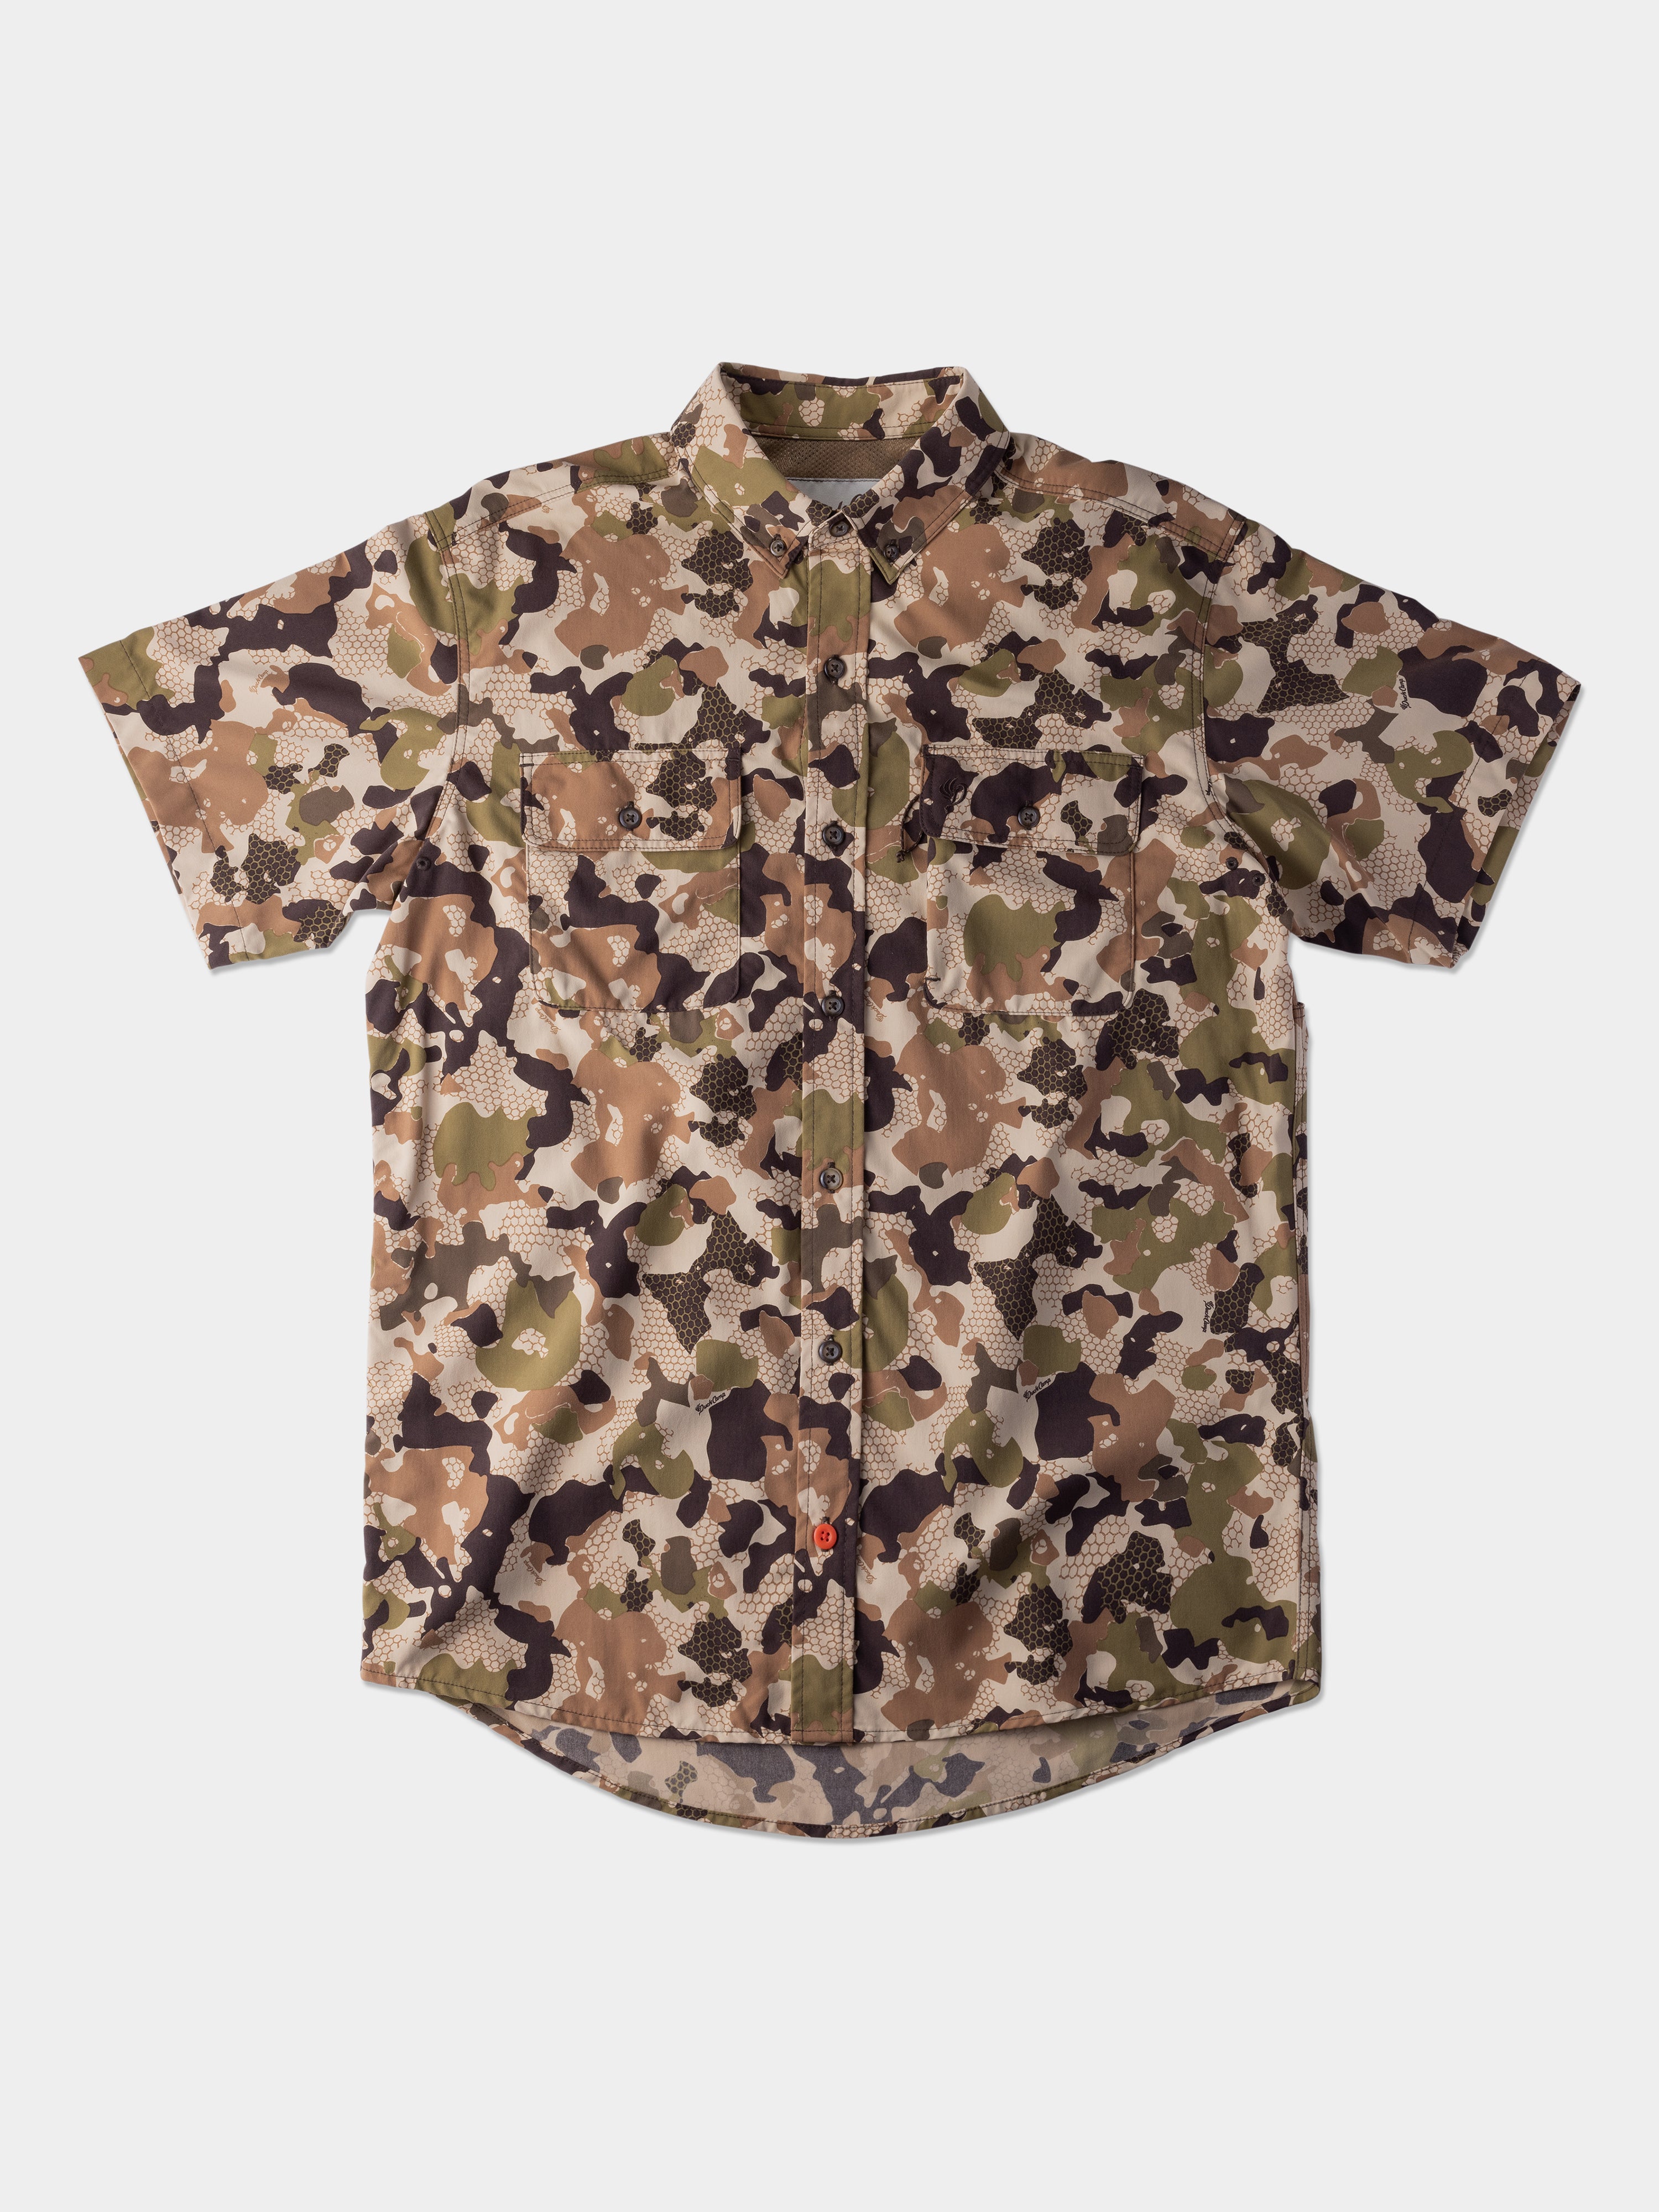 Duck Camp Lightweight Hunting Shirt Short Sleeve, Wetland | Large